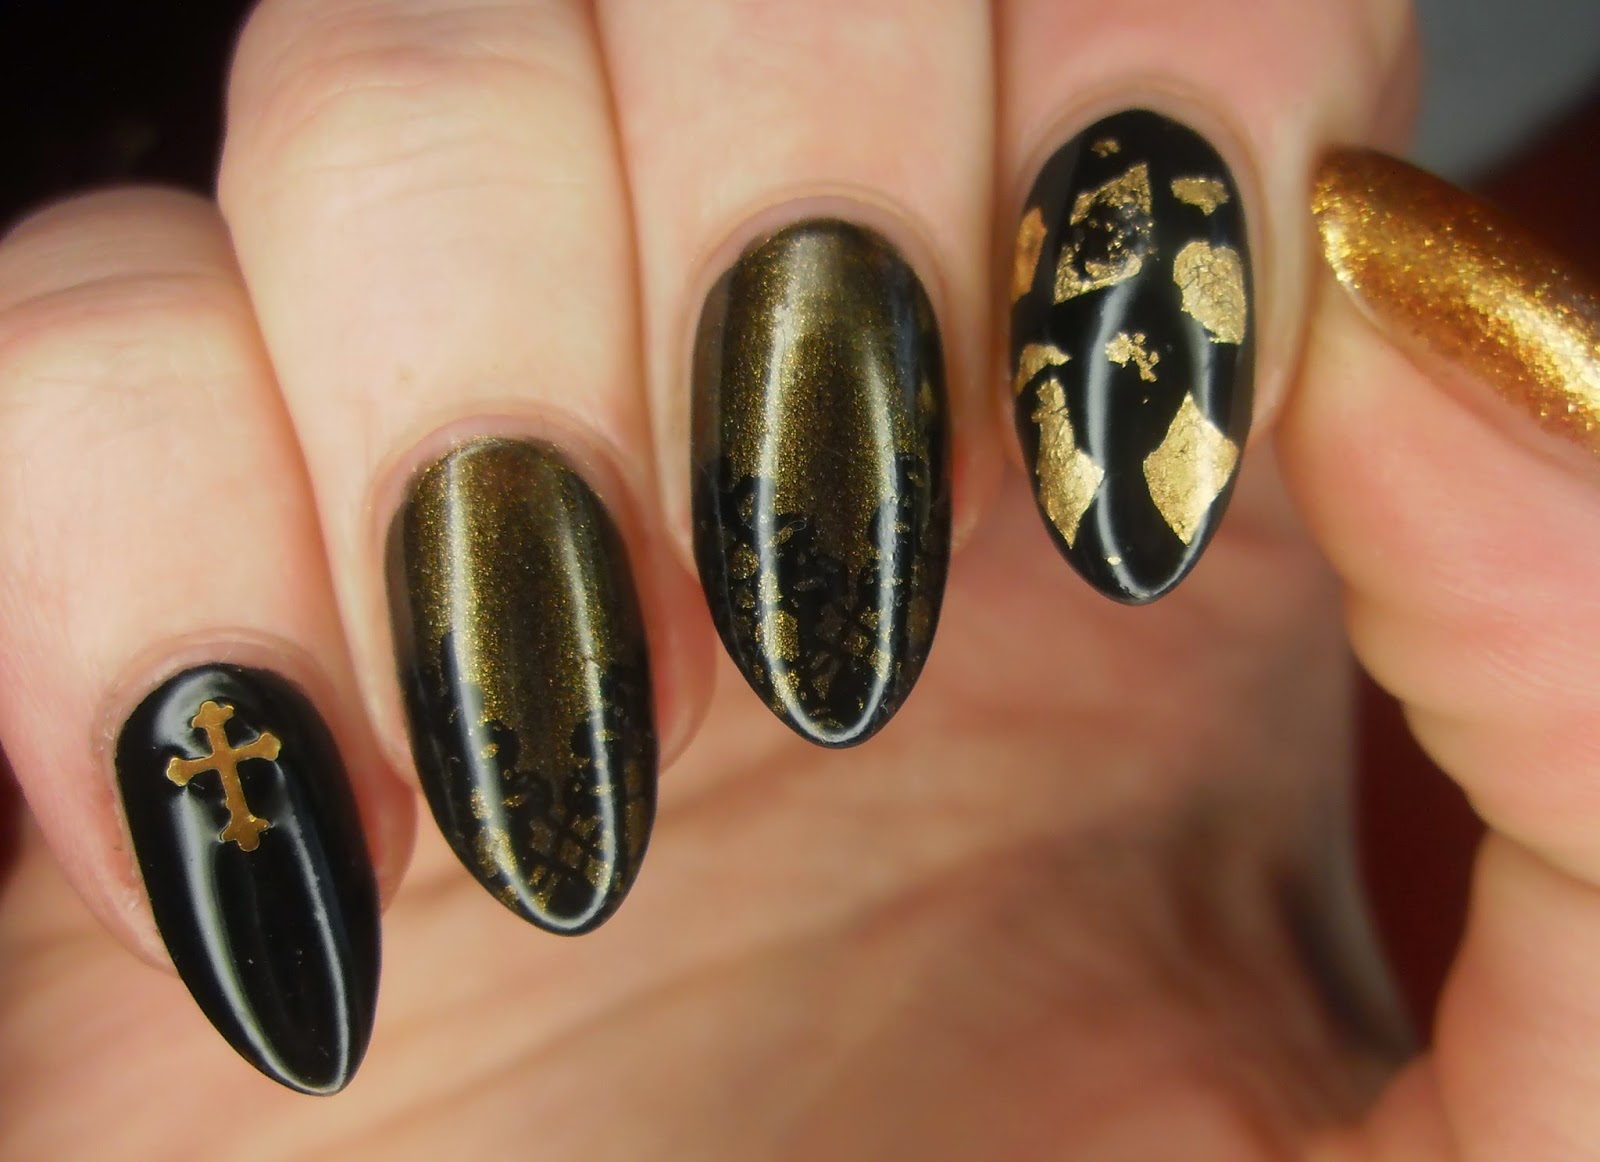 2. Elegant Sage and Gold Nail Art - wide 4